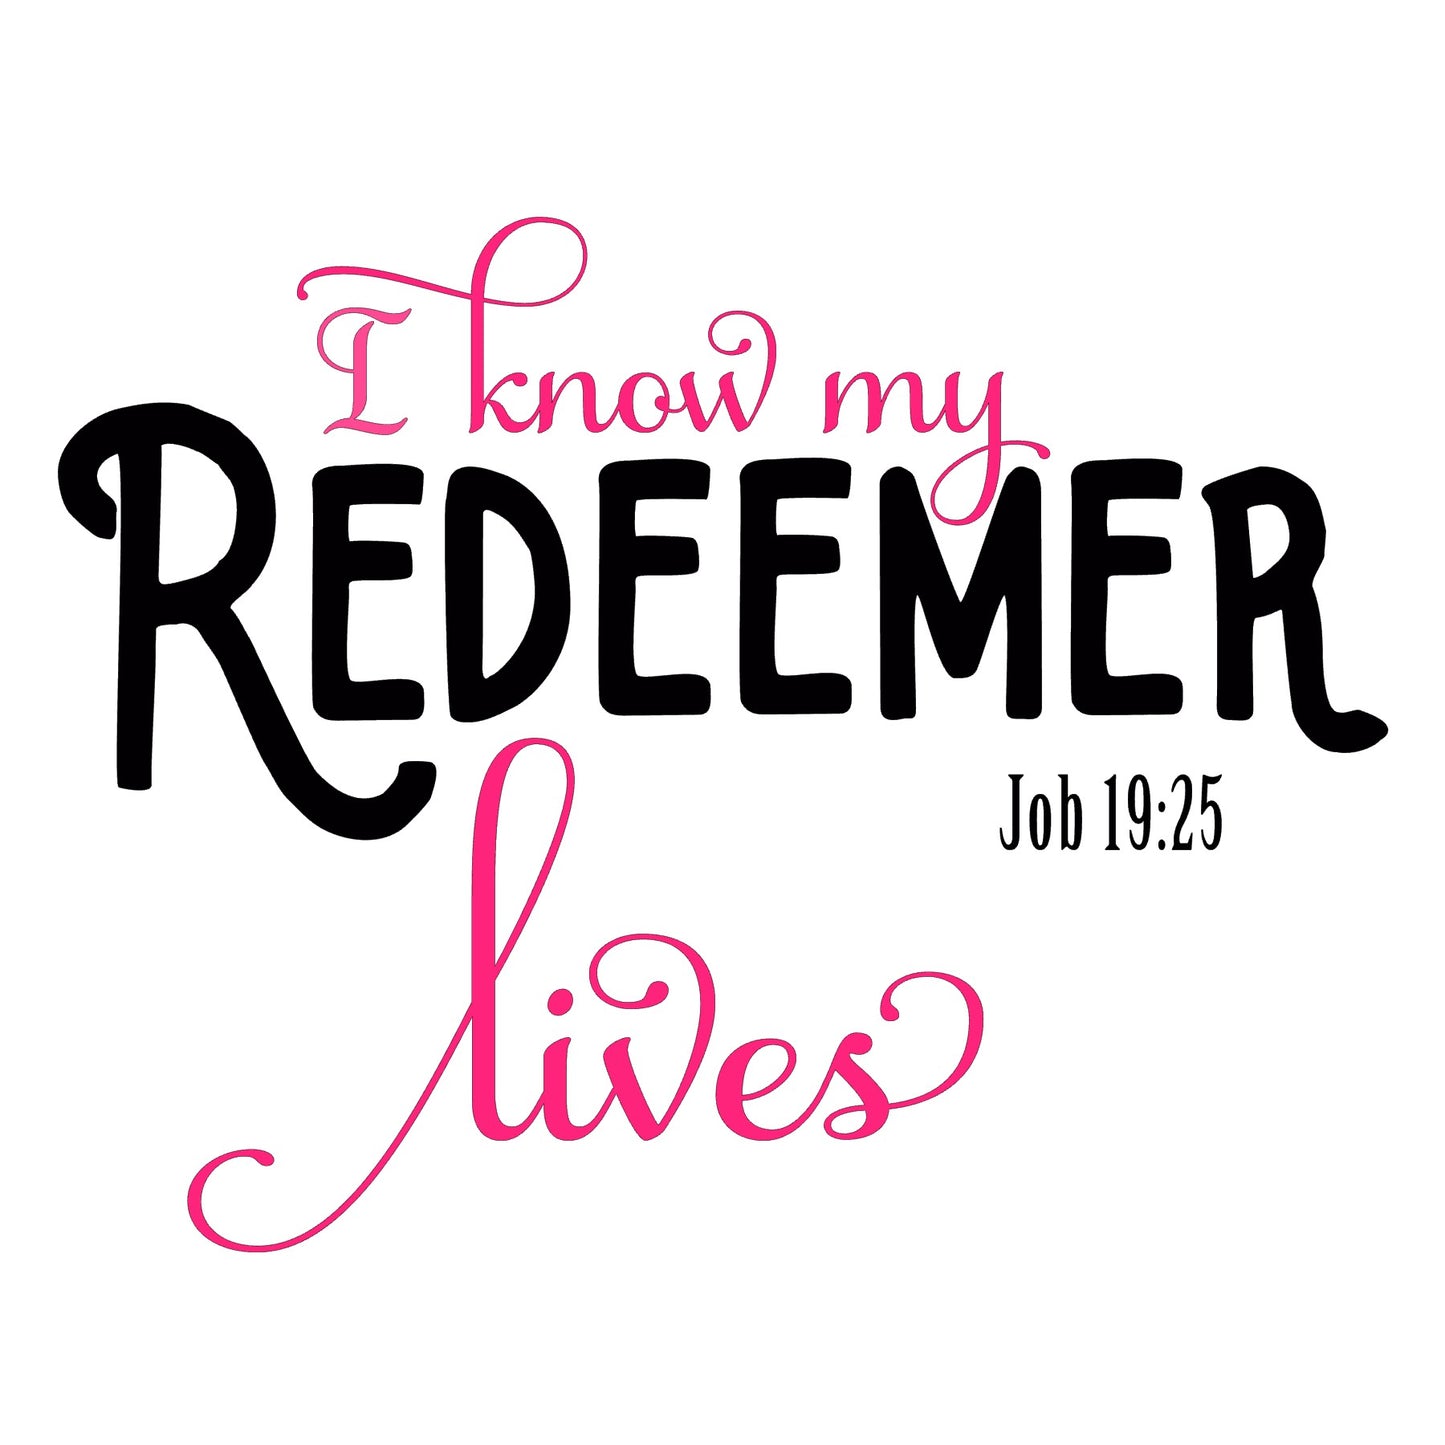 I Know My Redeemer Lives Job 19:25